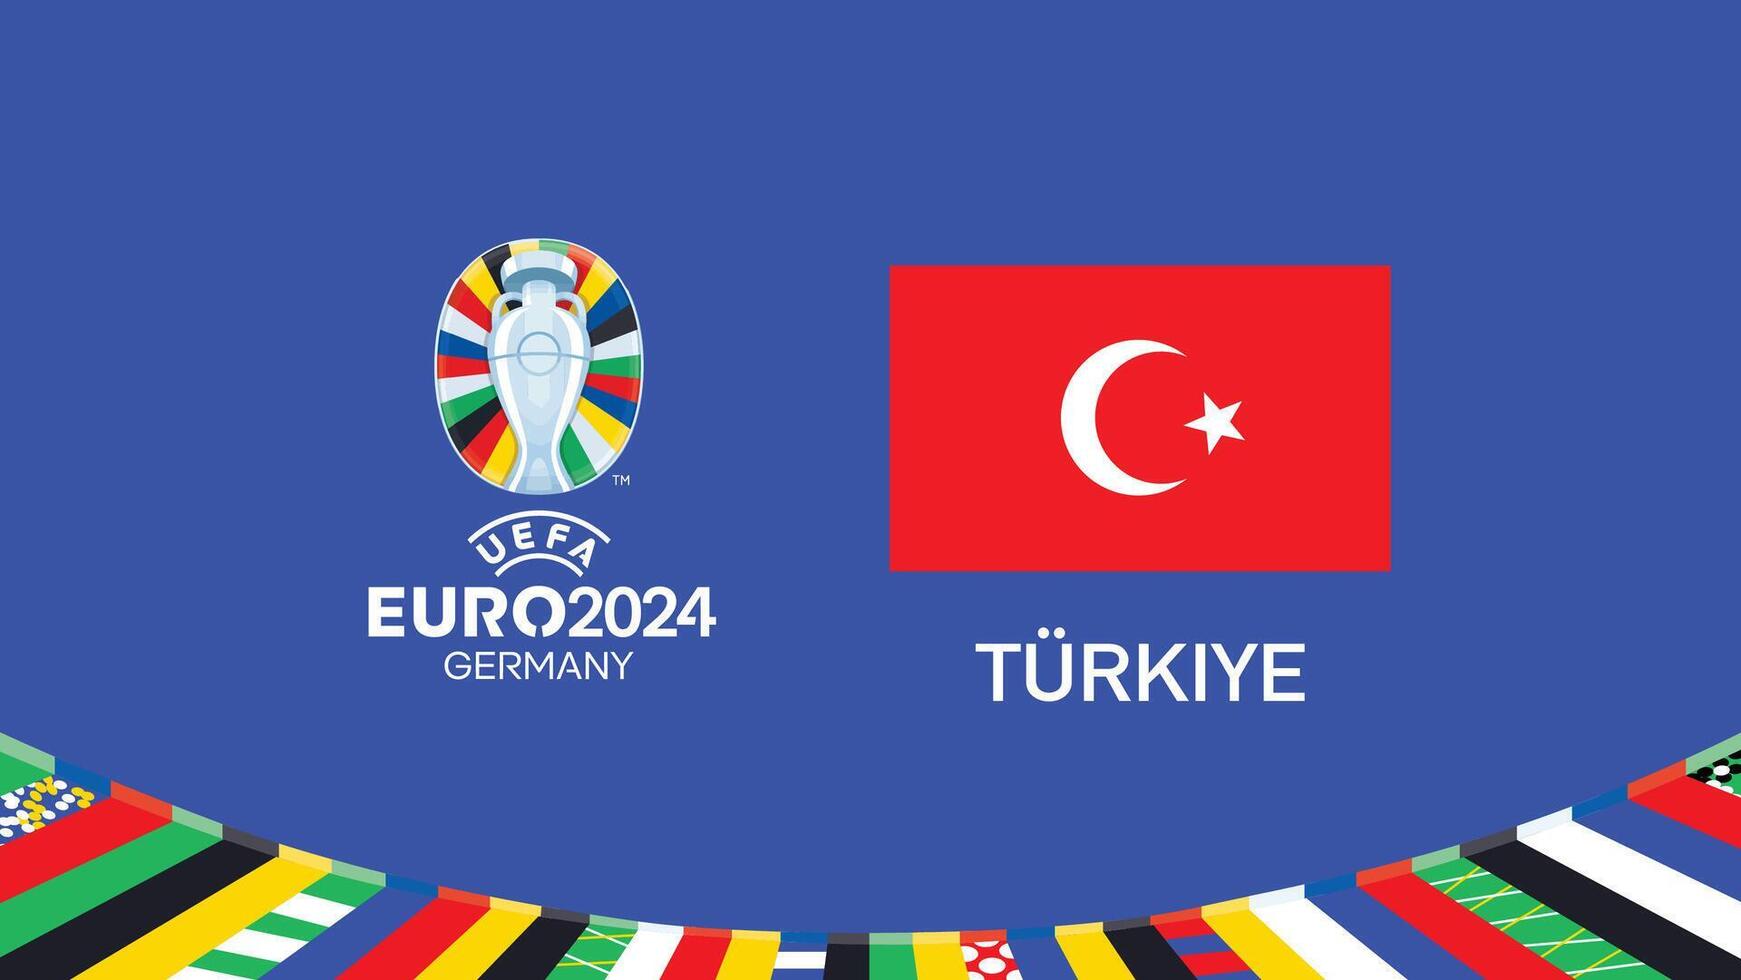 Euro 2024 Turkiye Emblem Flag Teams Design With Official Symbol Logo Abstract Countries European Football Illustration vector